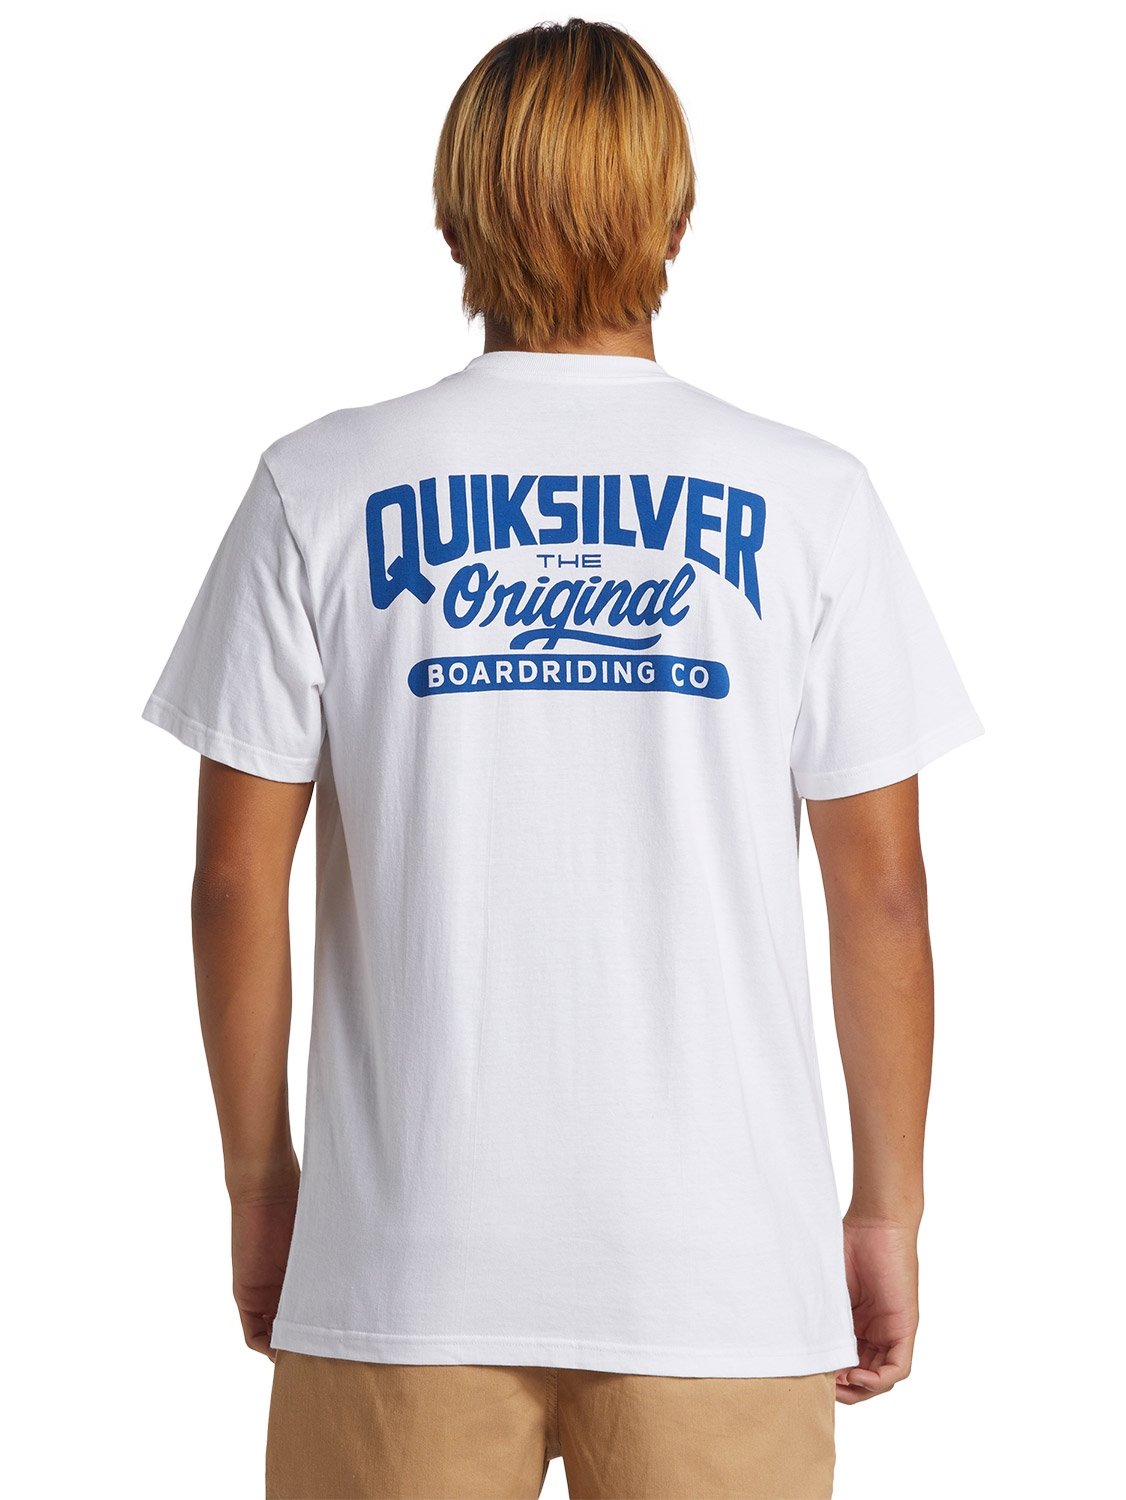 Quiksilver Men's Original Script T-Shirt